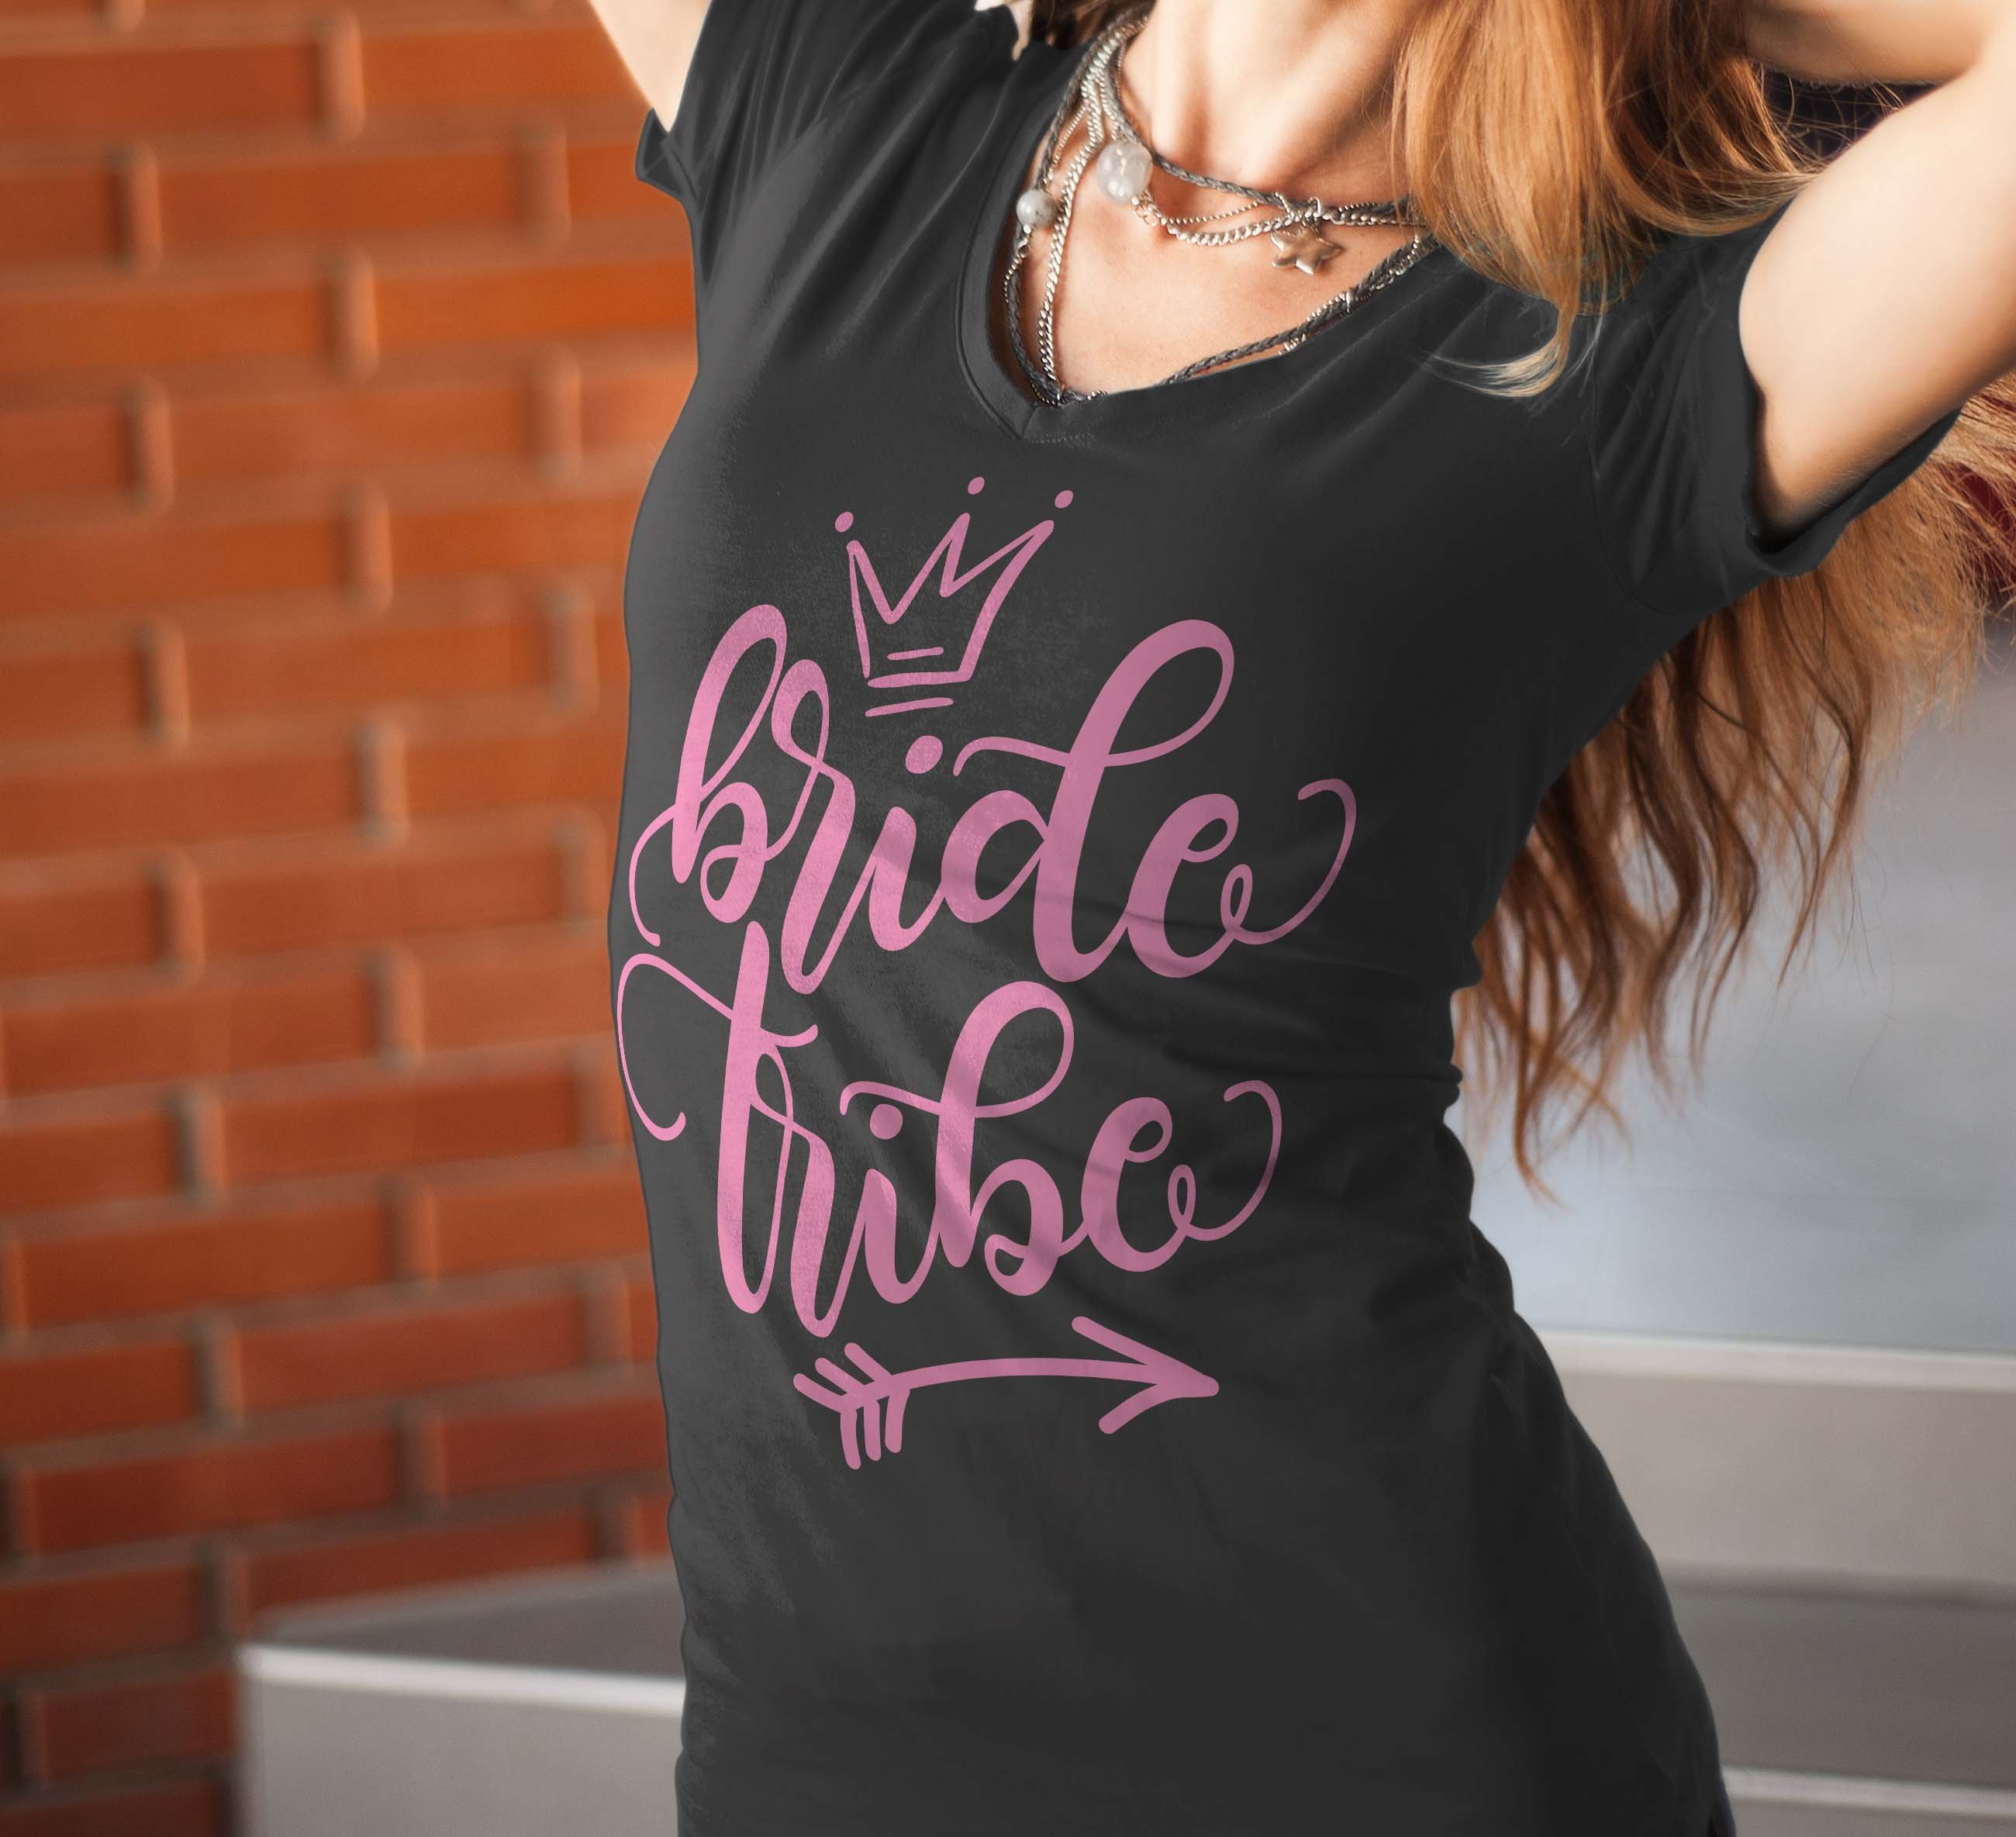 bride tribe t shirt2 235